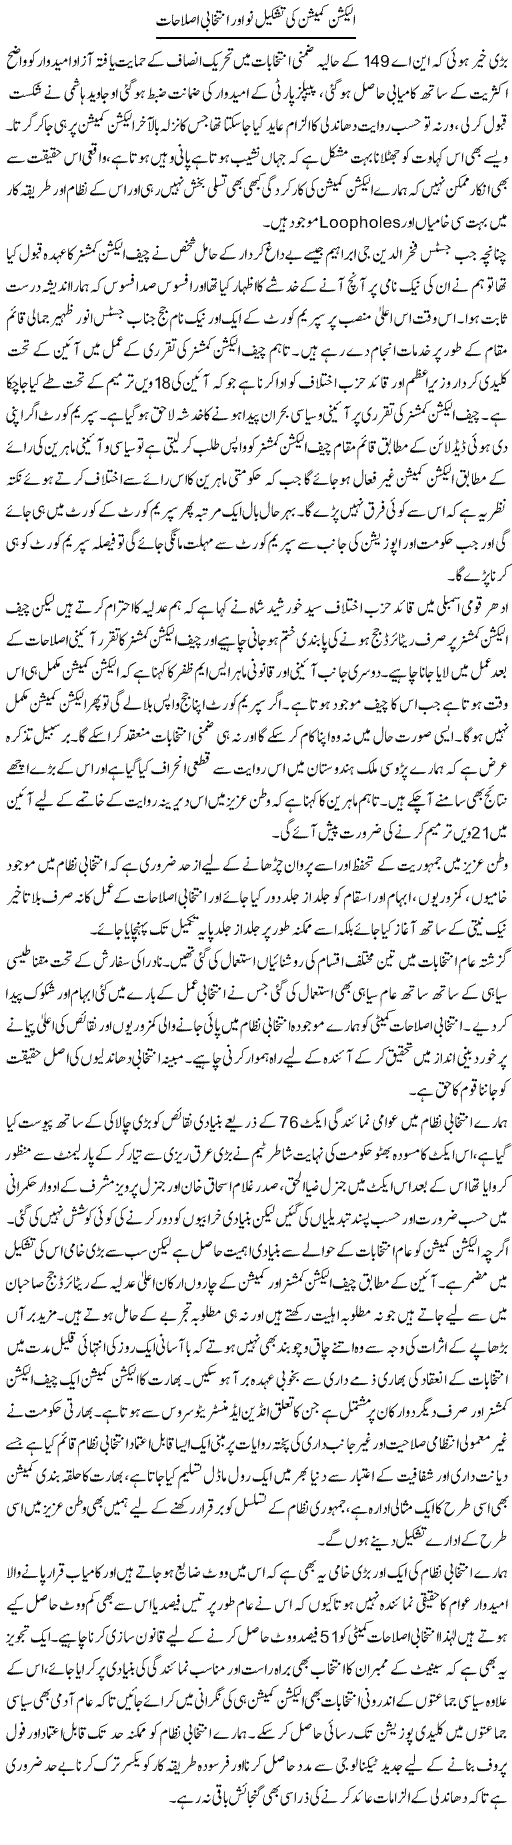 Election Commission Ki Tashkeel e Nau Our Entekhabi Islahat | Shakeel Farooqi | Daily Urdu Columns